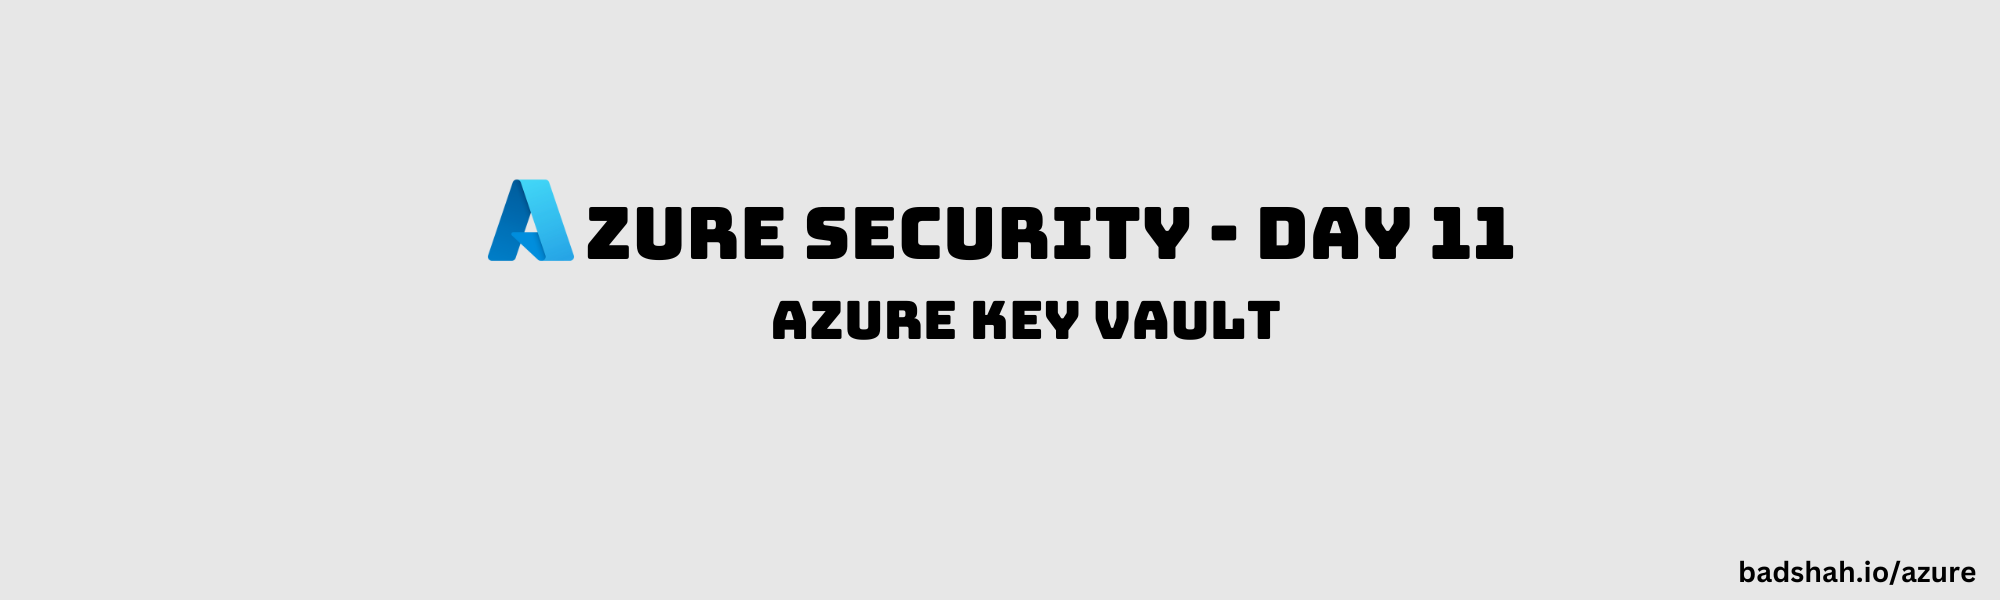 /azure/key-vault/cover-image.png